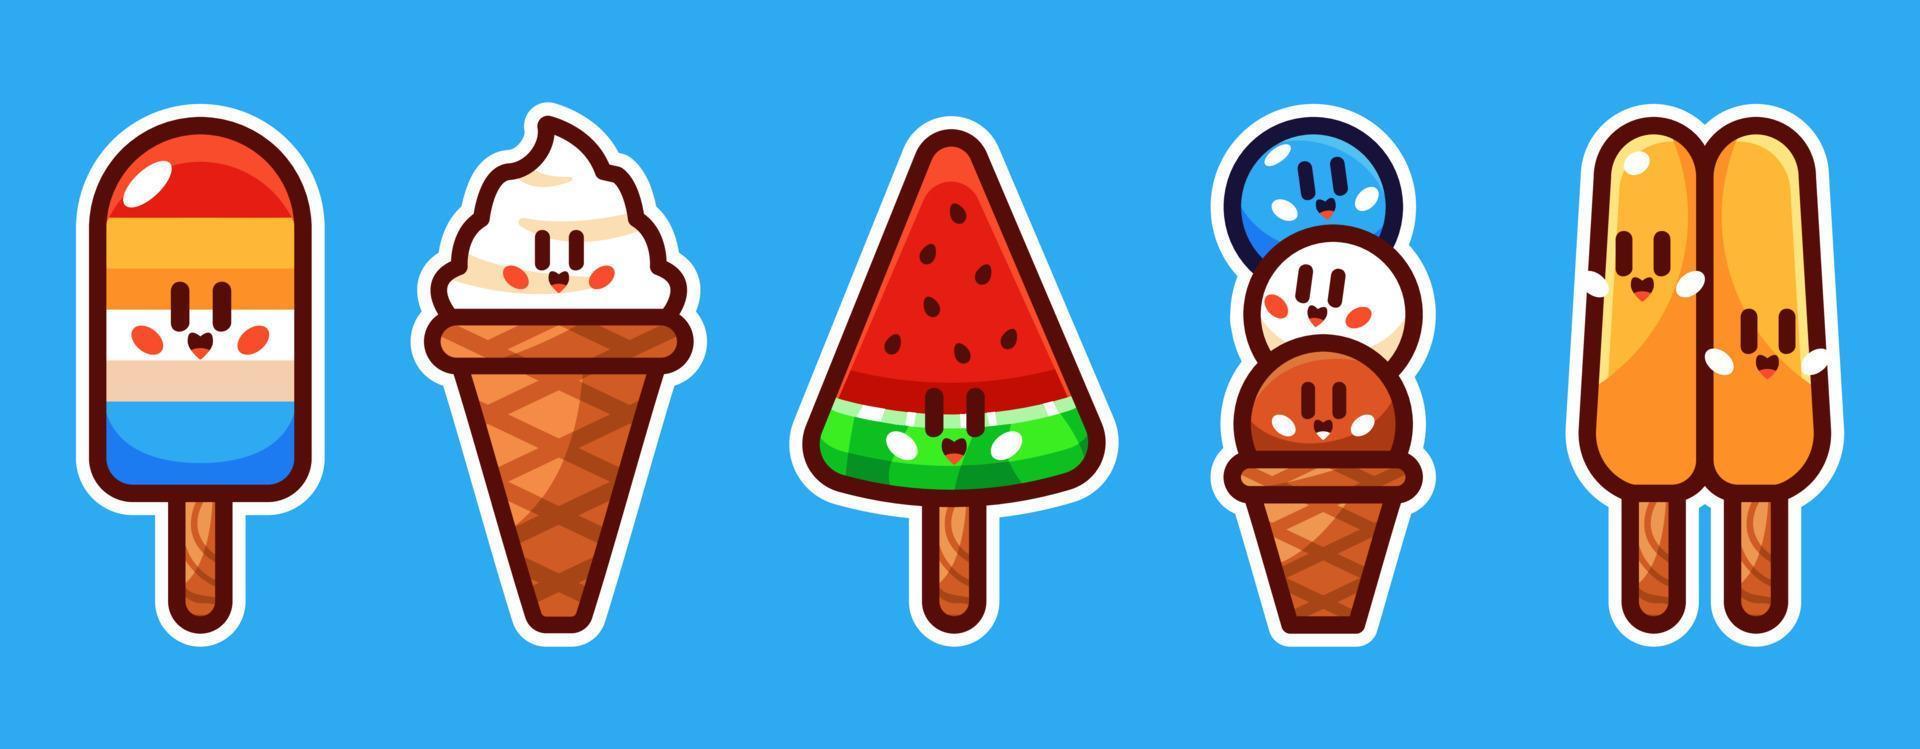 cute ice cream cartoon vector illustration set